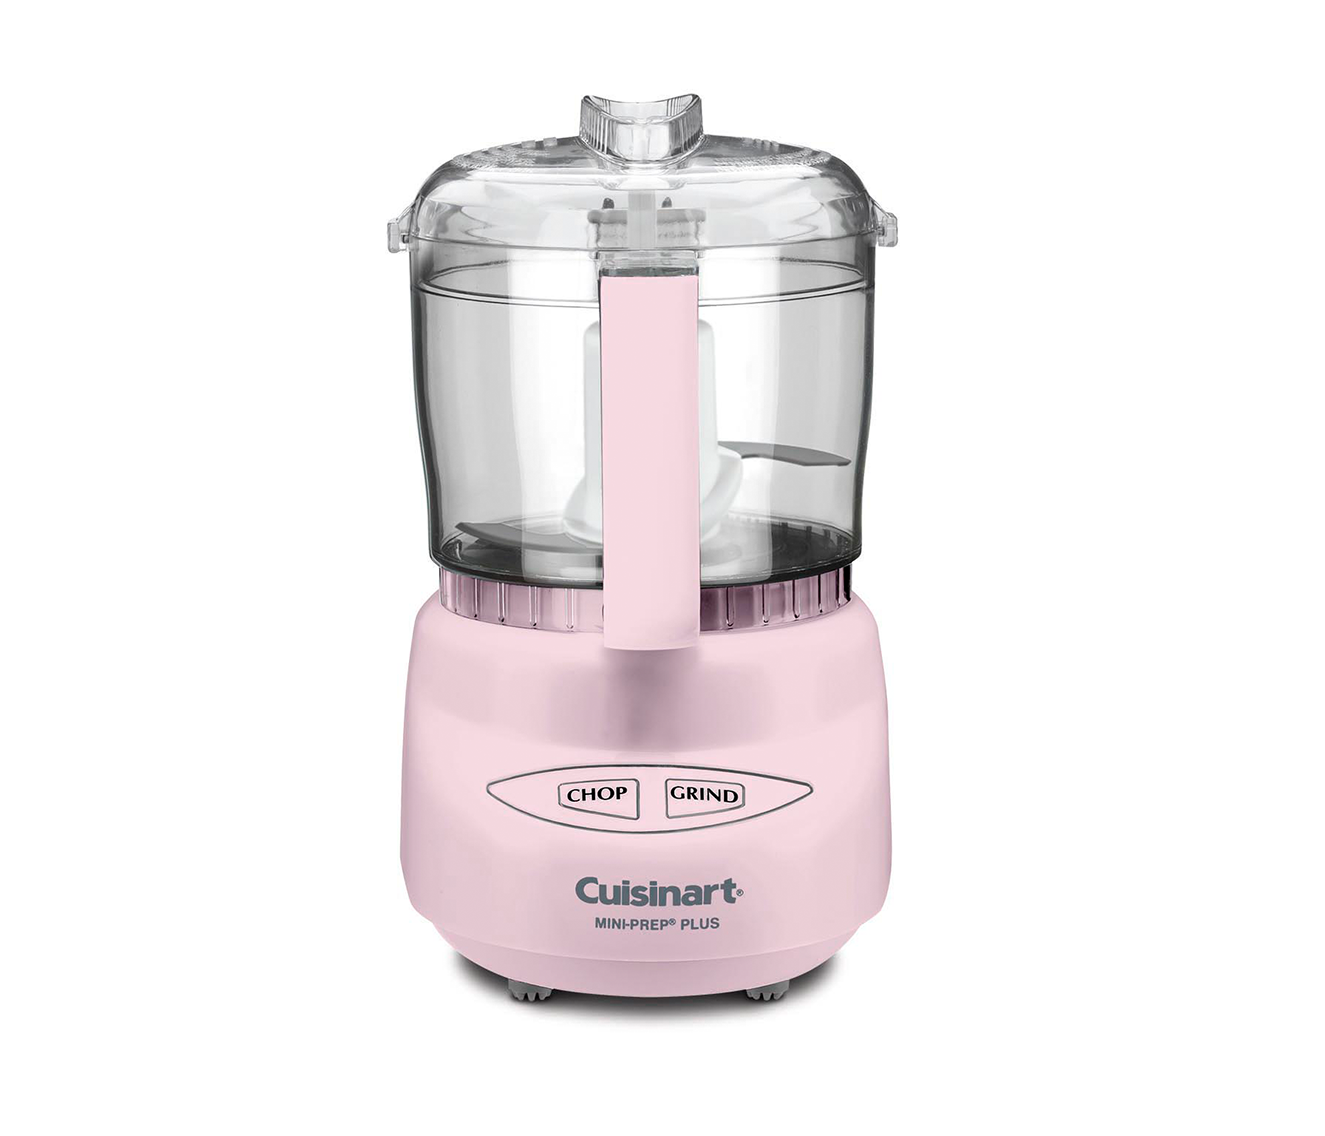 Cuisinart Mini-Prep Plus 3-Cup Food Processor, Light Pink (Factory